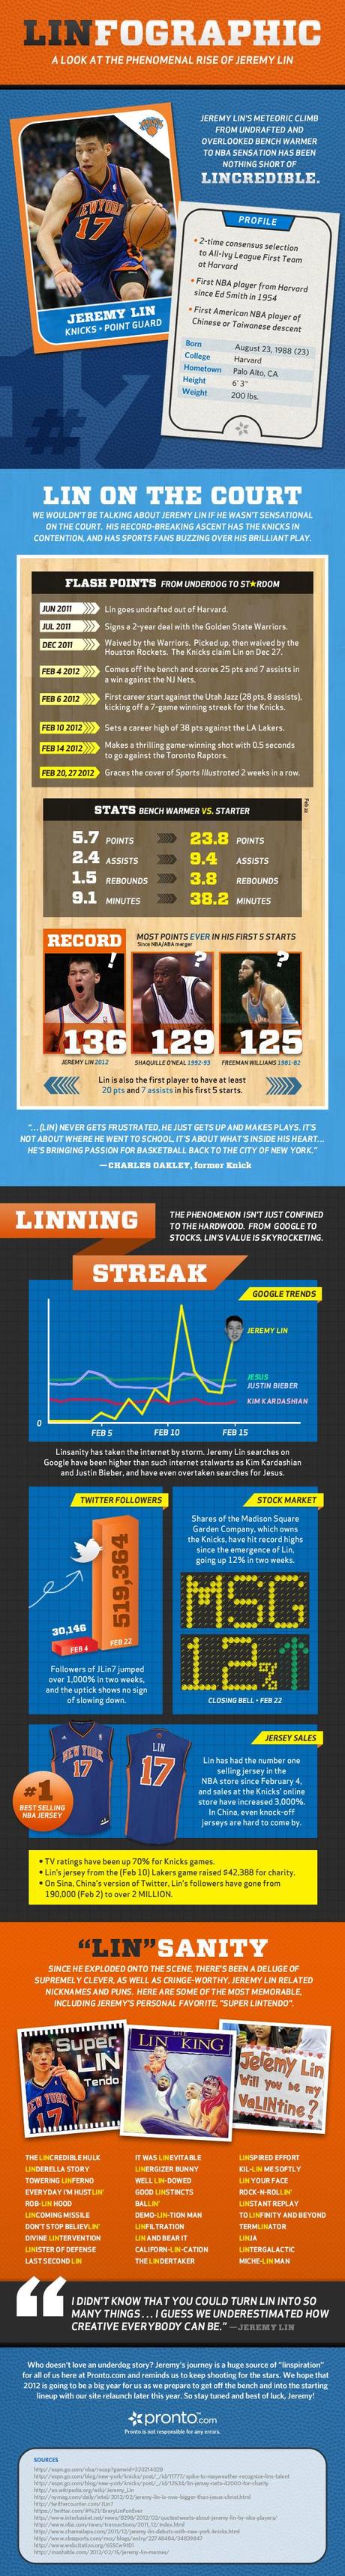 LINfographic: Jeremy Lin la sua storia